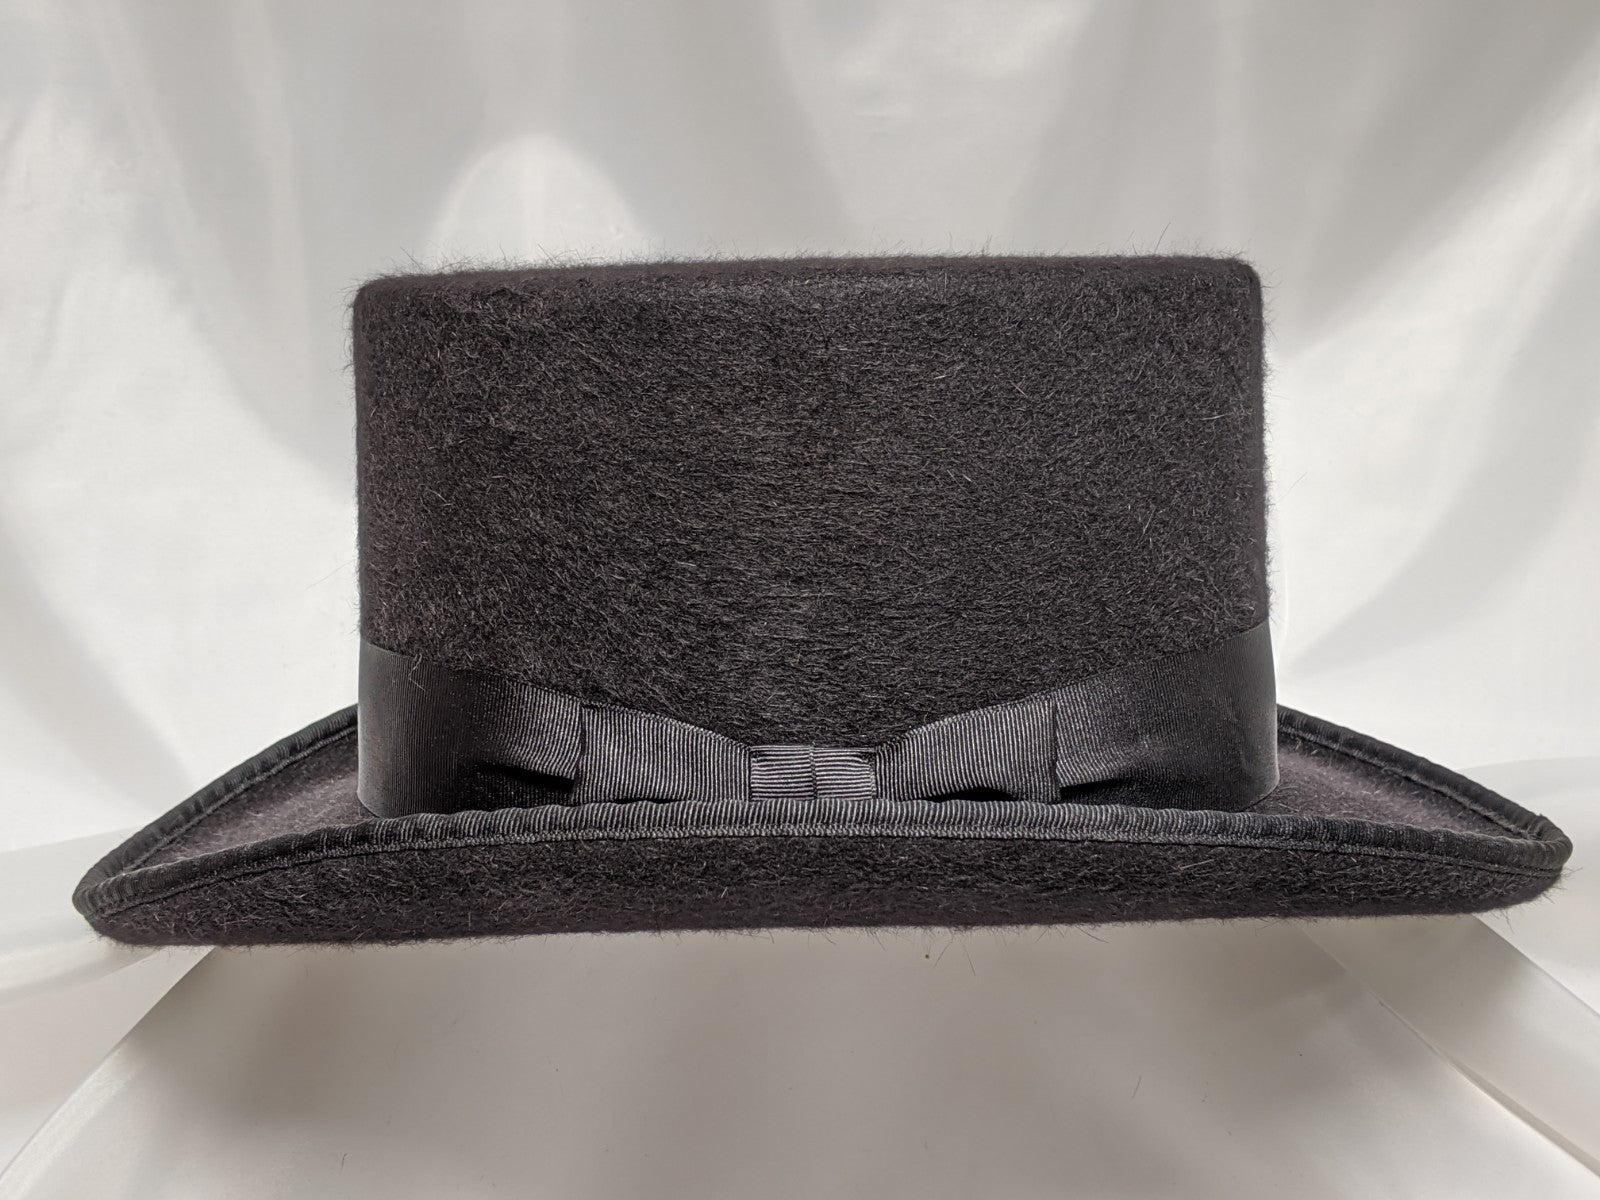 Top Hat Straw, Dark Gray Straw Top Hat, Formal Top Hat, Handmade